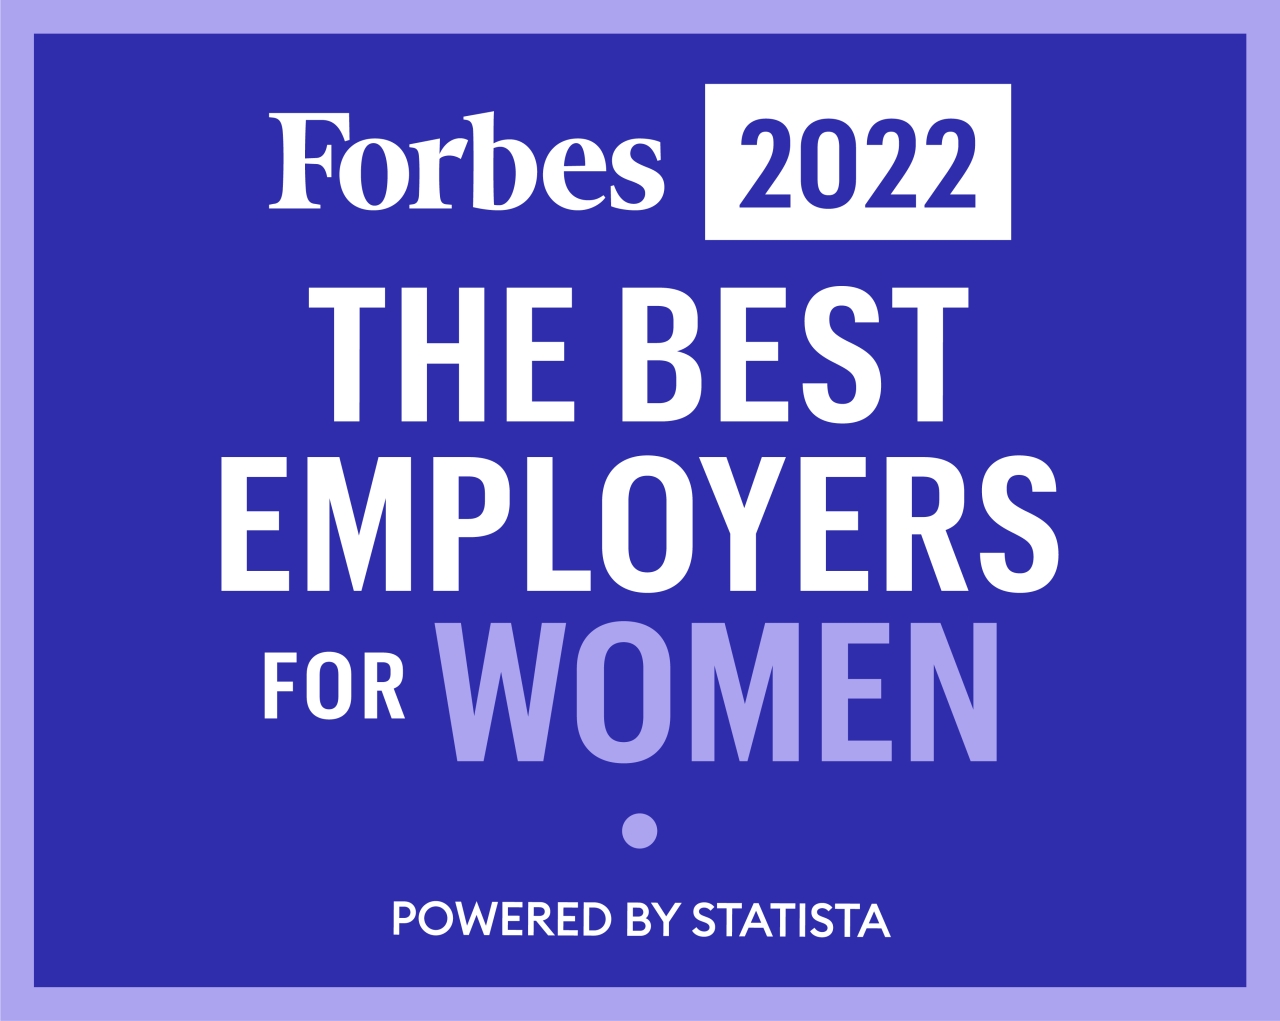 Forbes’ Best Employers for Women 2022 award